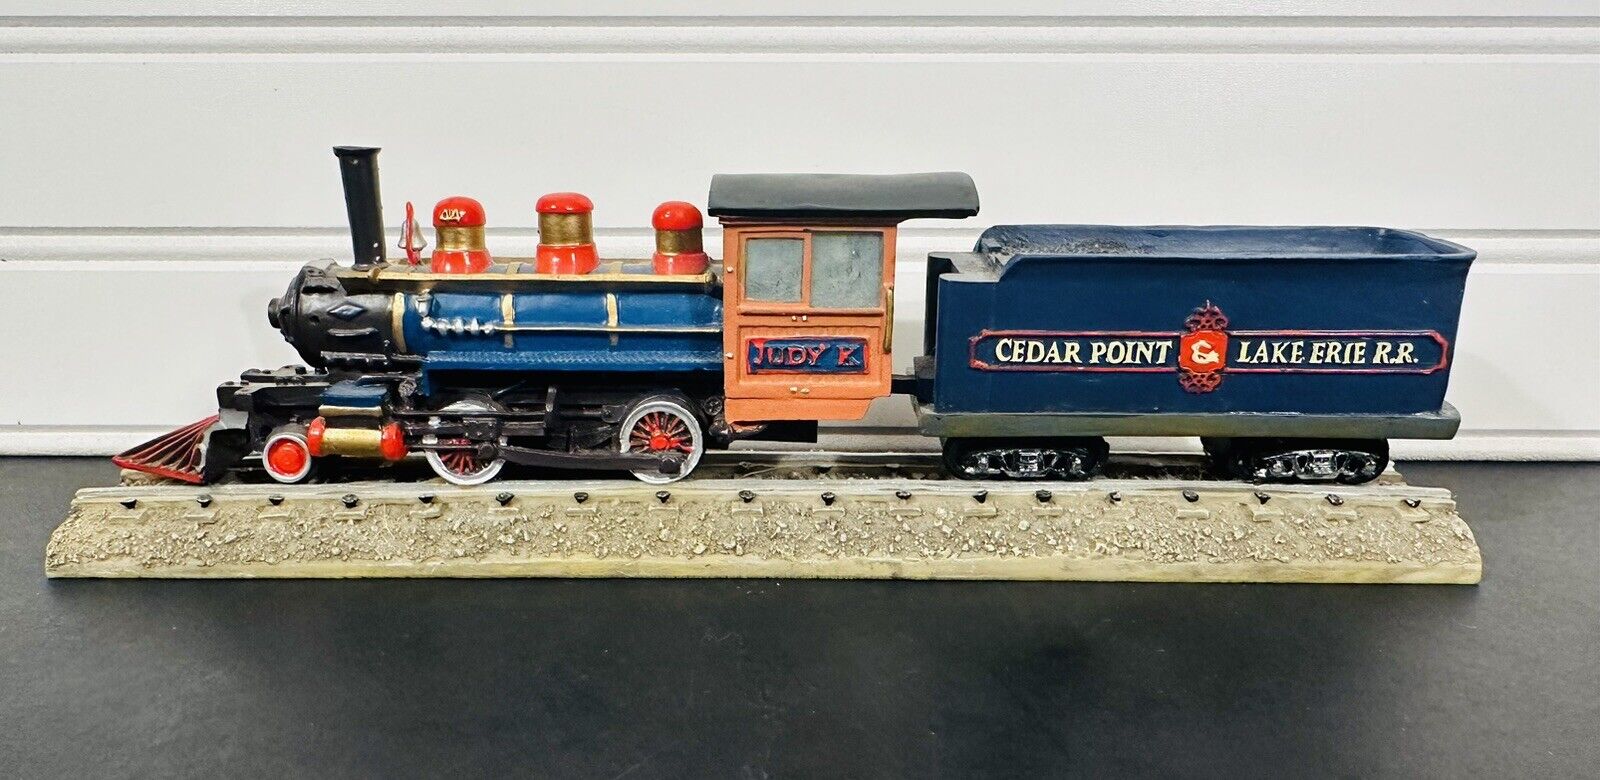 Vintage Cedar Point & Lake Erie Railroad 10 Inch Resin  “JUDY K” Train